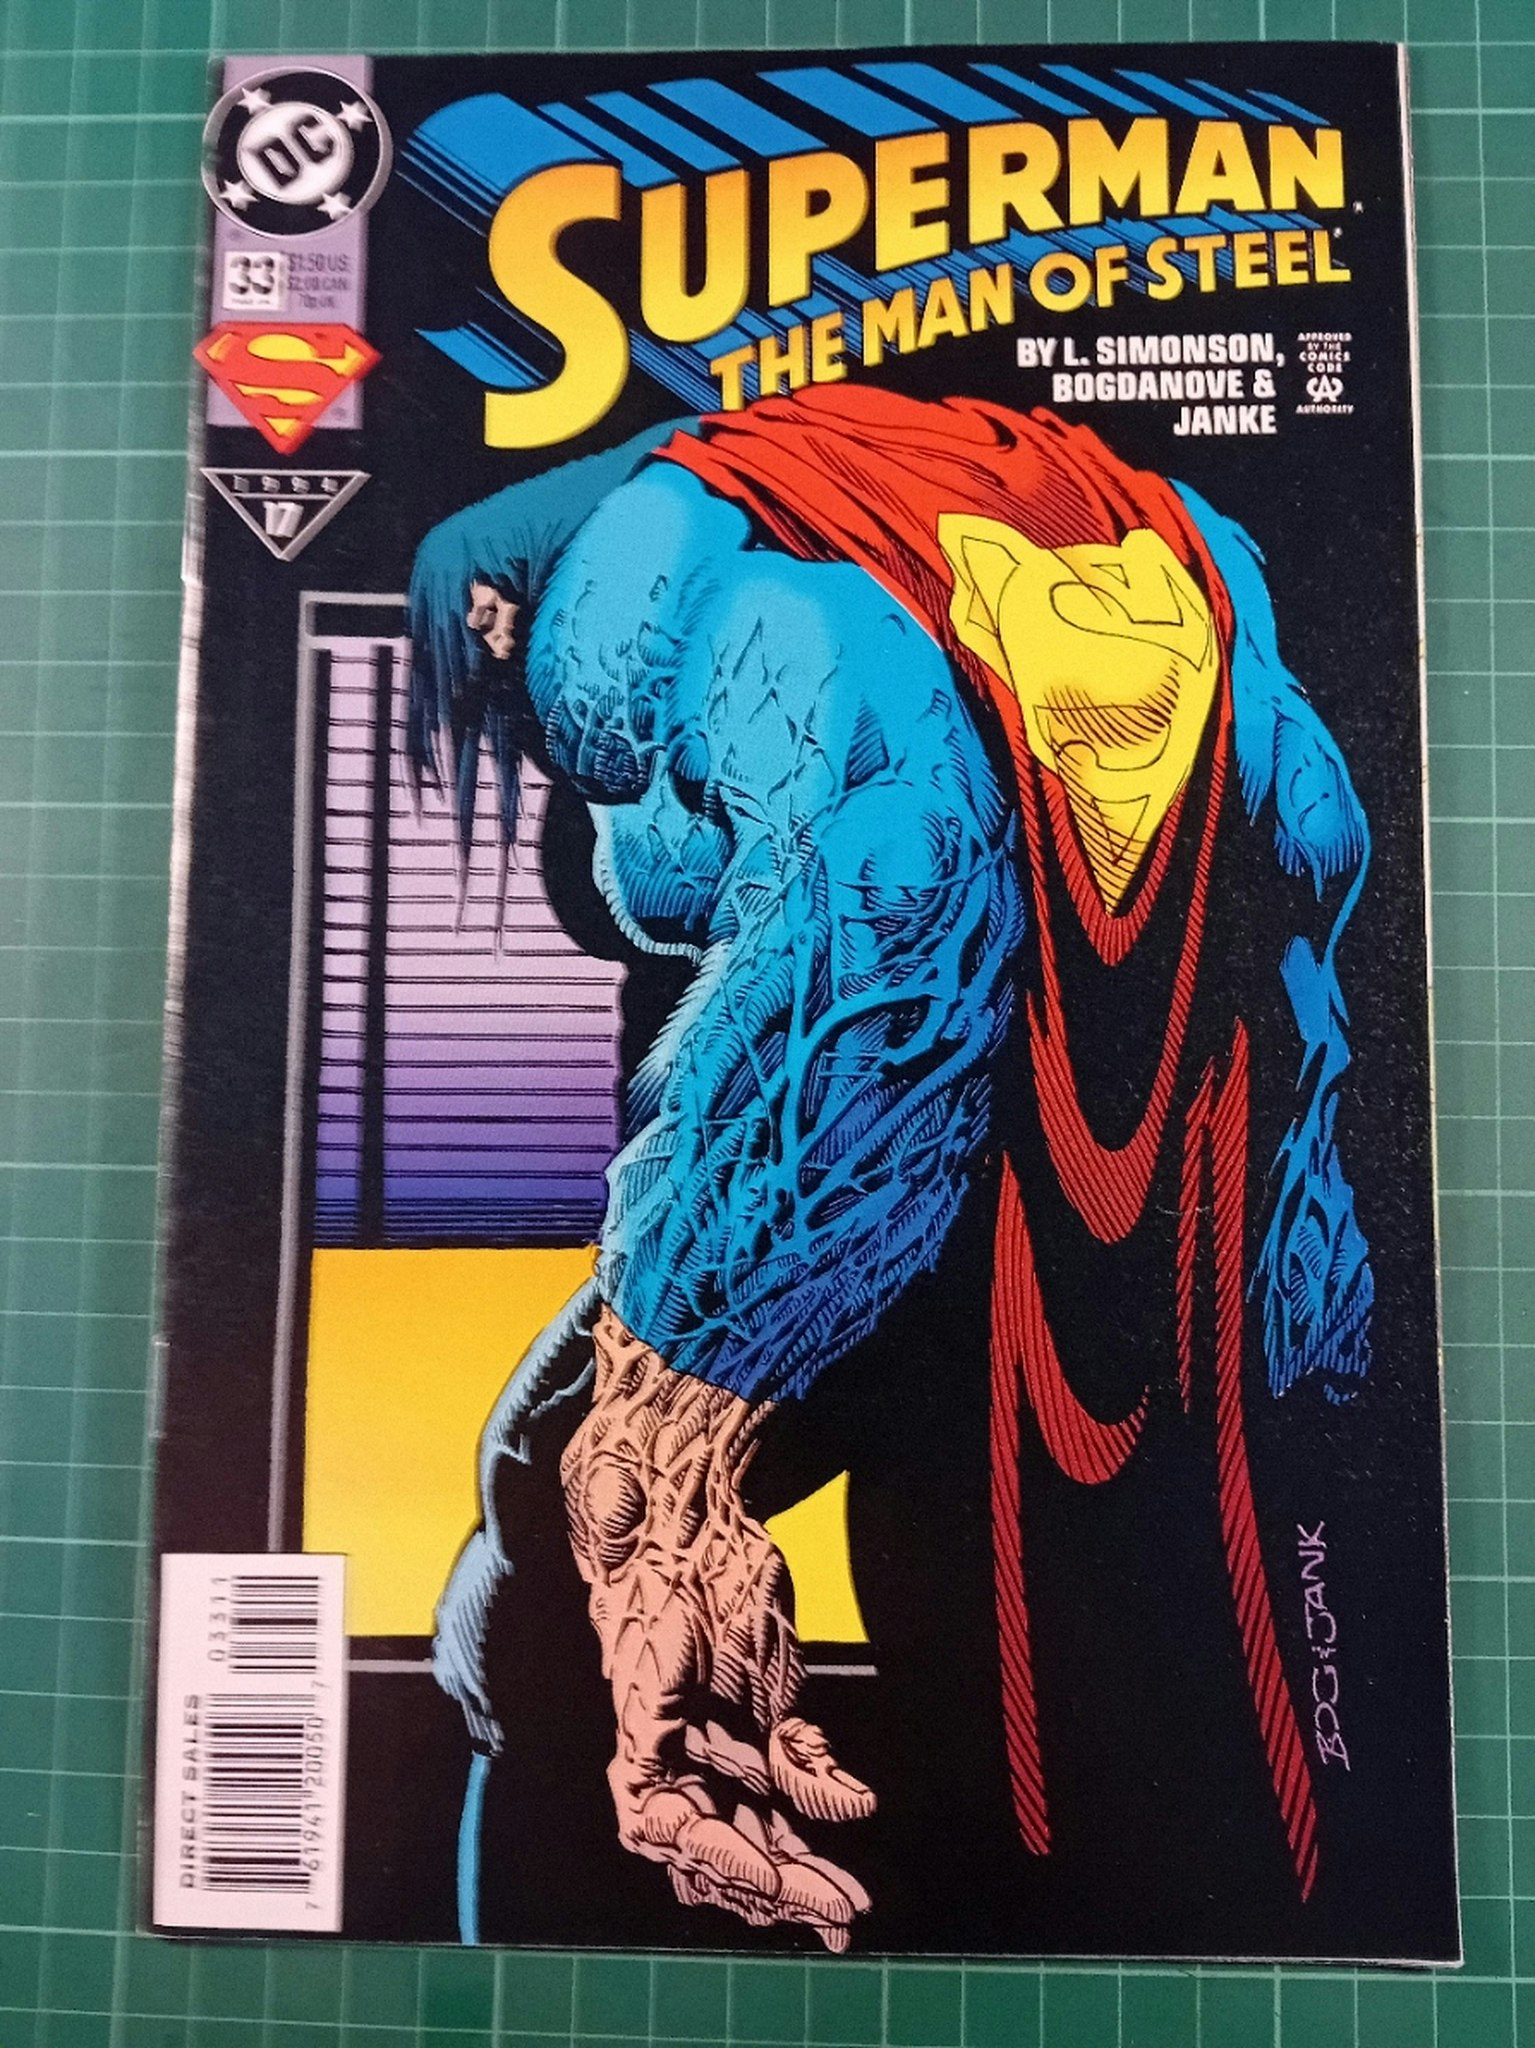 Superman the man of steel #33